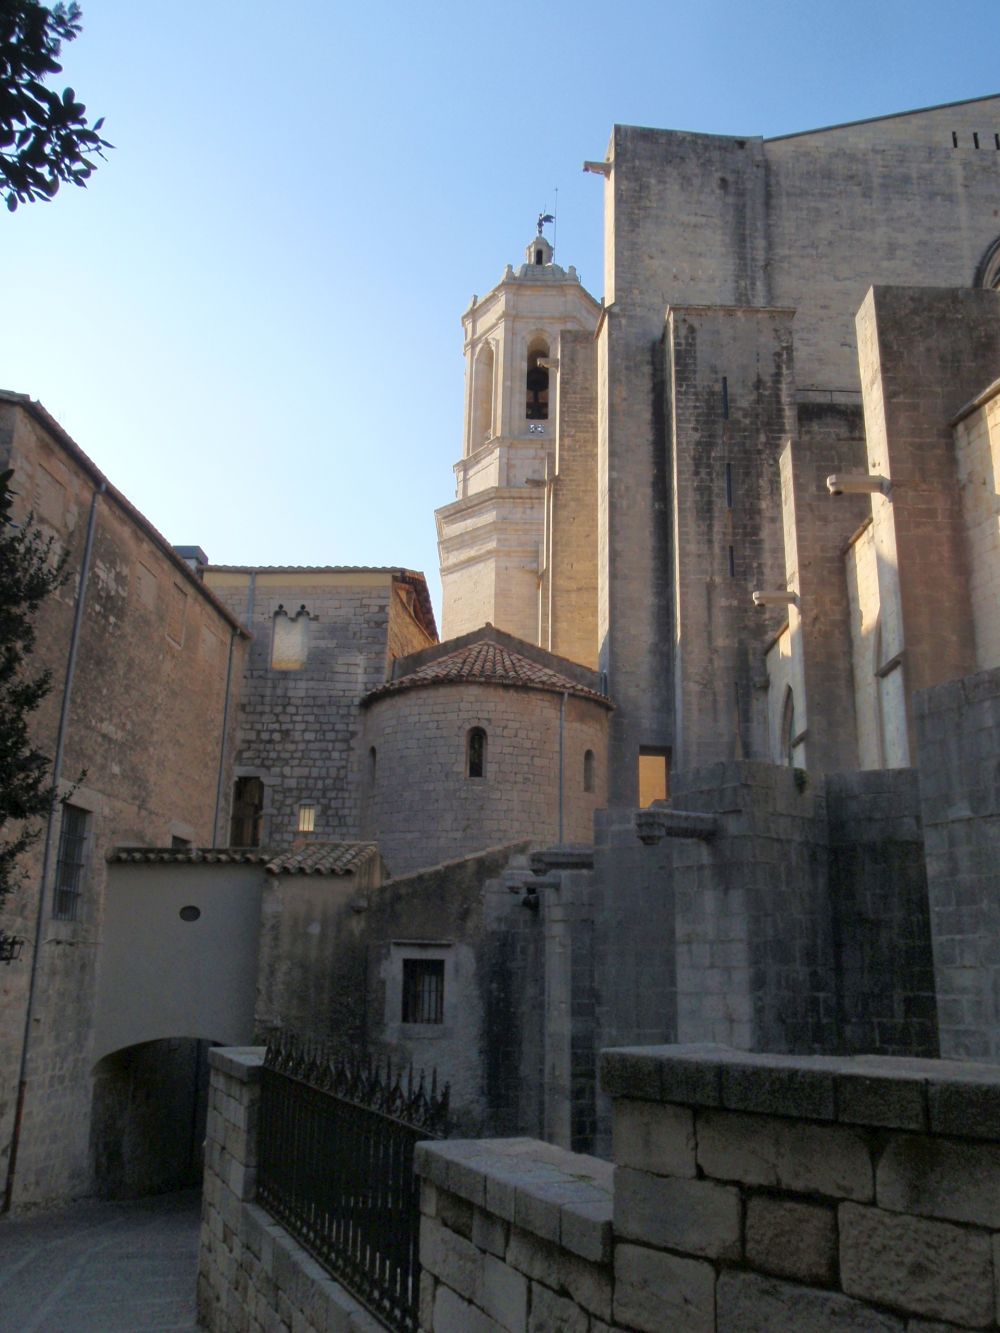 El Girona genera patrimonio 